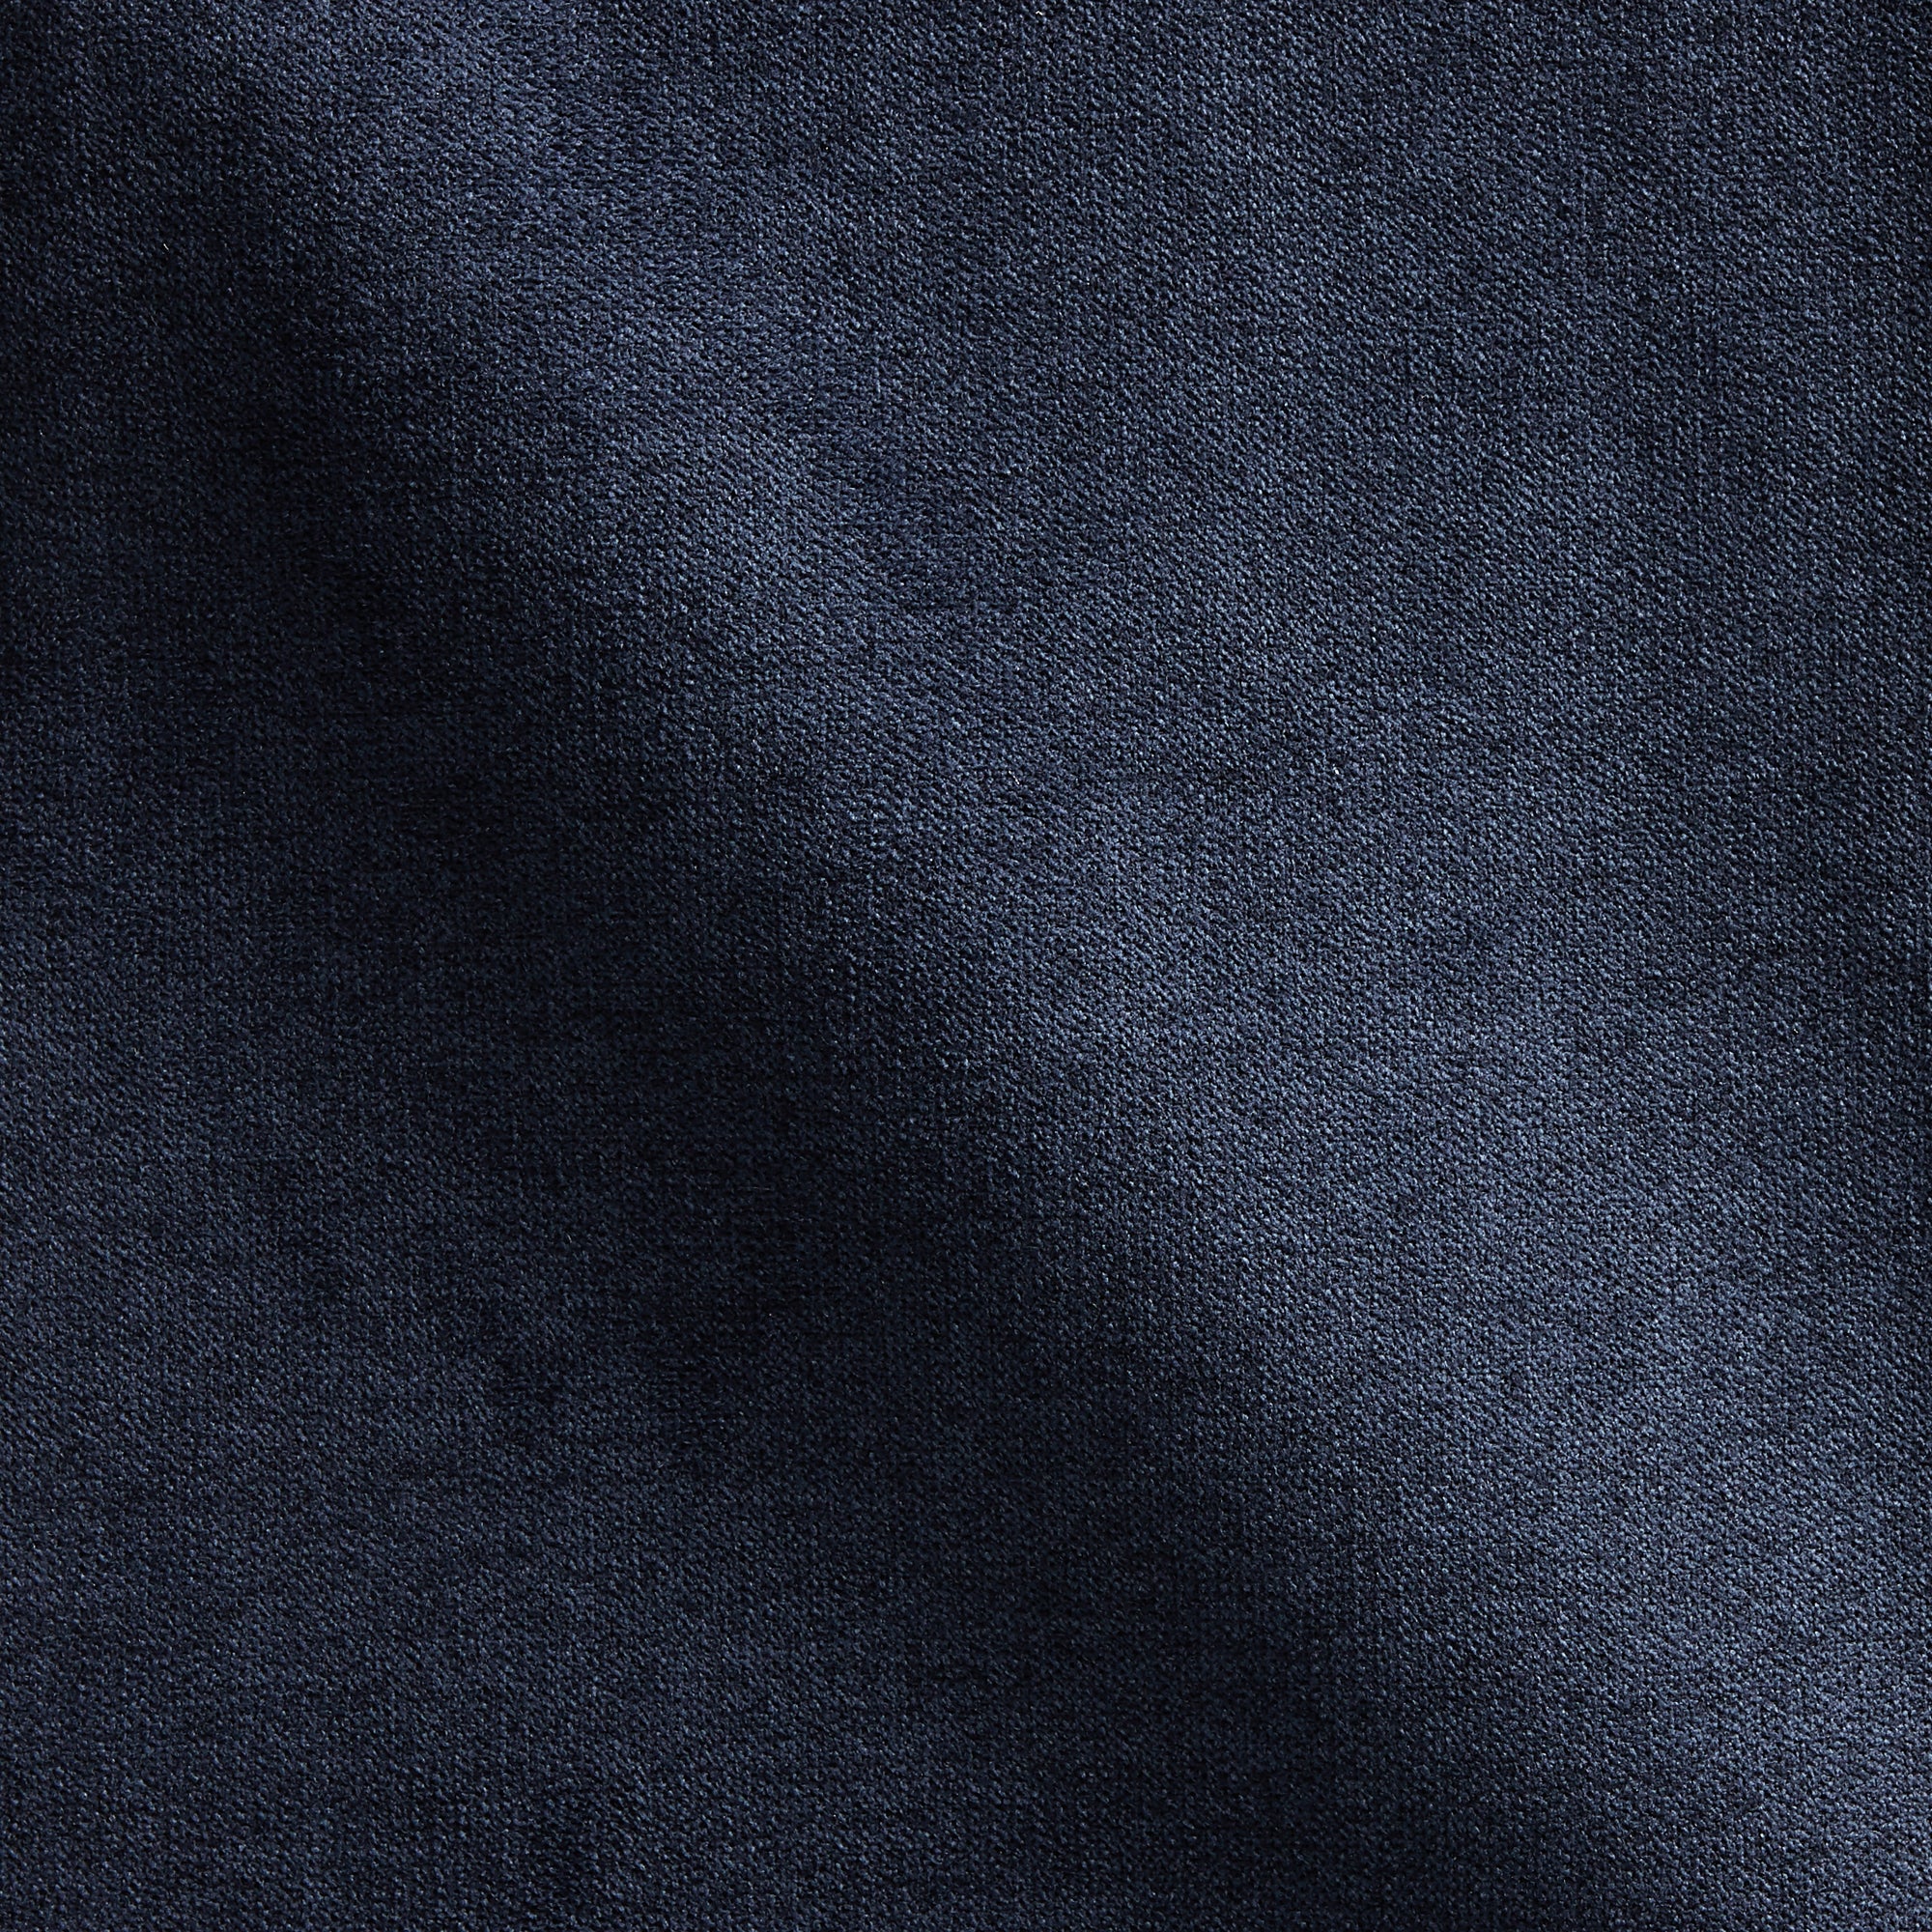 Nevis Made to Measure Fabric Sample Nevis Jacquard Royal Blue